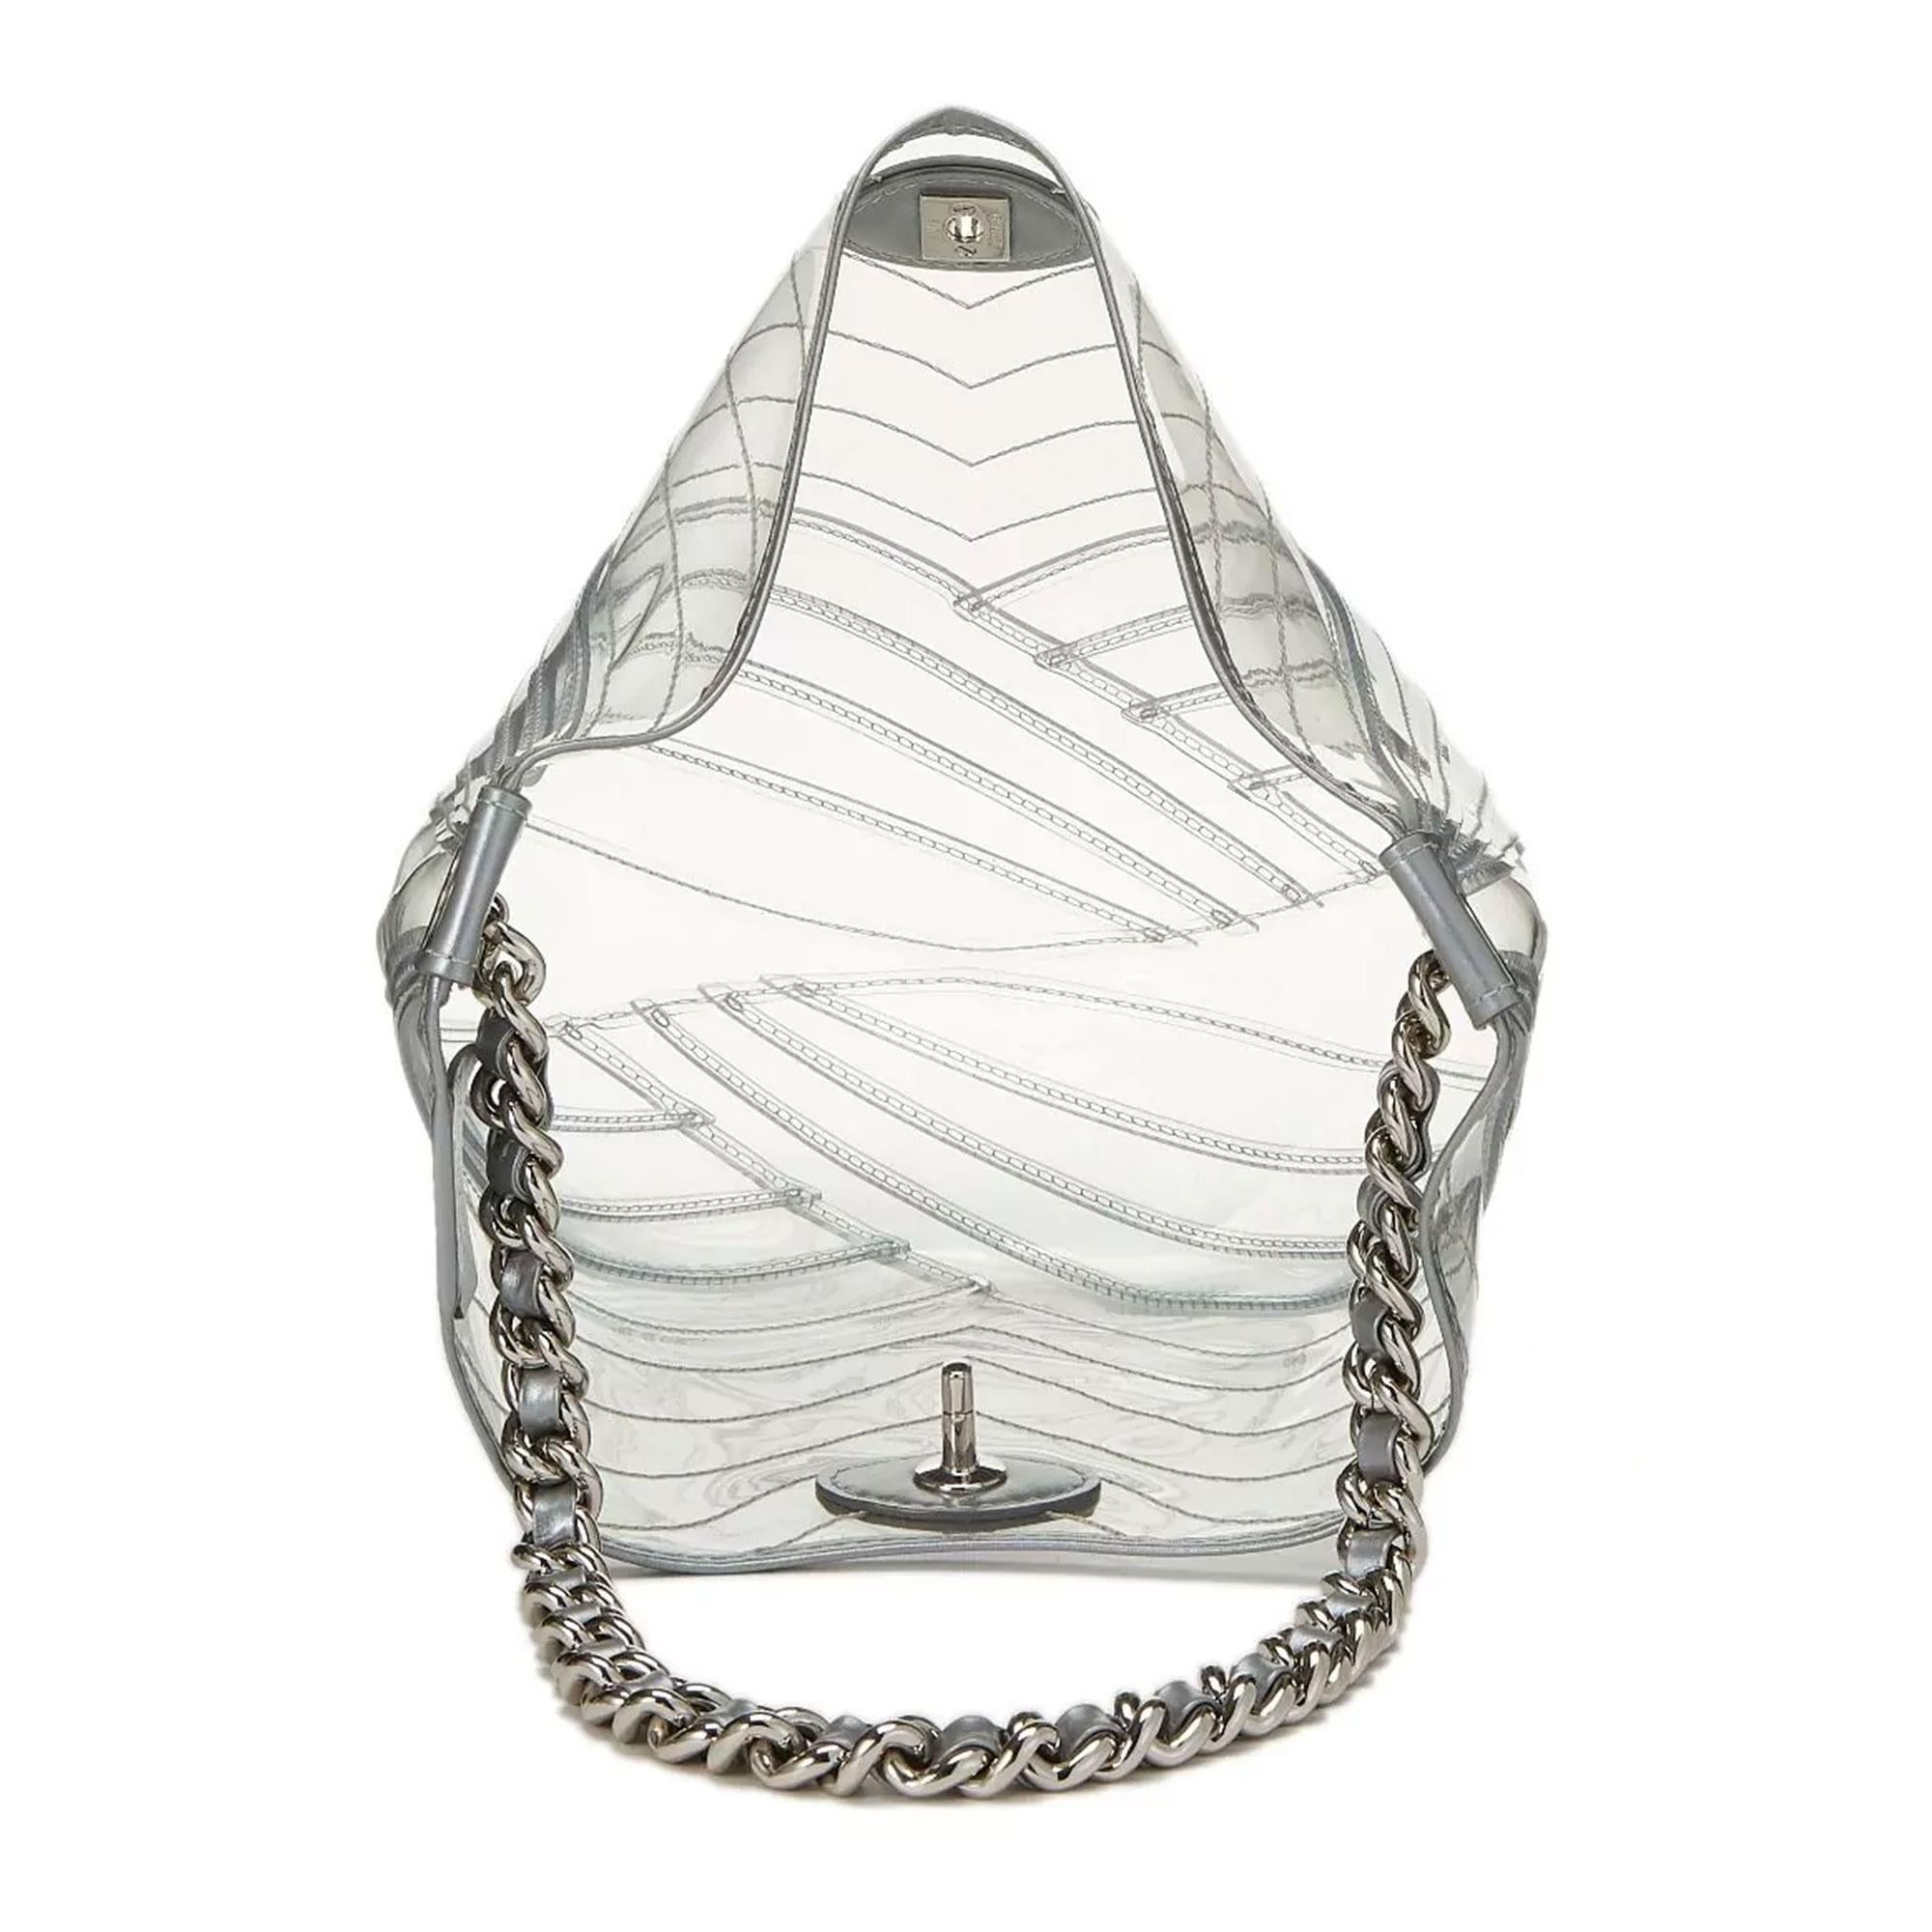 Chanel Hobo Handbag Transparent Teardrop Spring 2018 Clear Pvc Satchel In Good Condition For Sale In Miami, FL